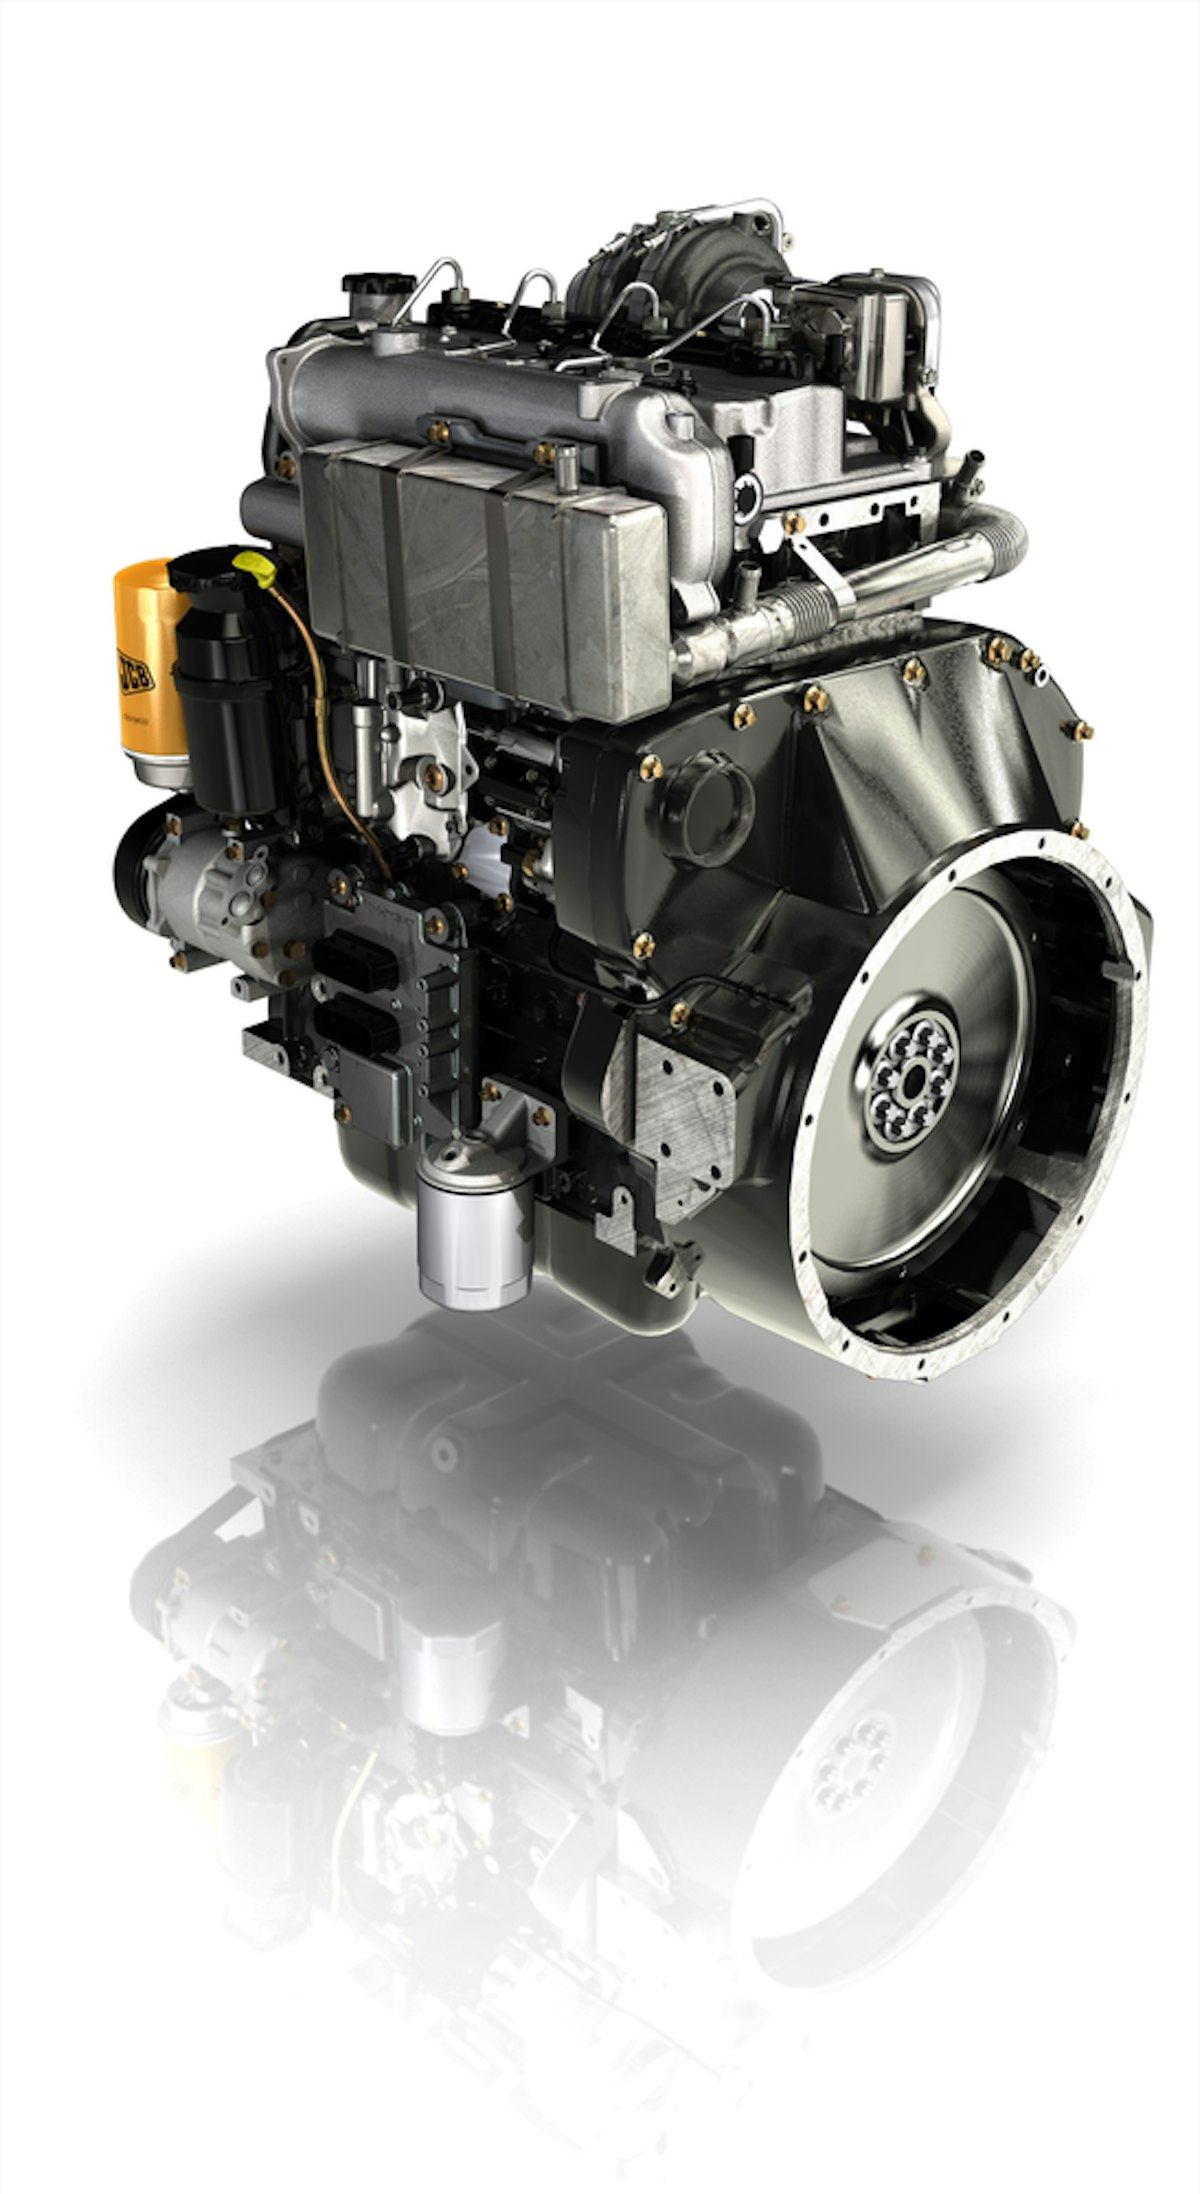 Jcb 3cx dieselmax. JCB DIESELMAX 4.4. Двигатель дизель JCB 3cx. Дизель Макс двигатель JCB. JCB 2010 444 двигатель.